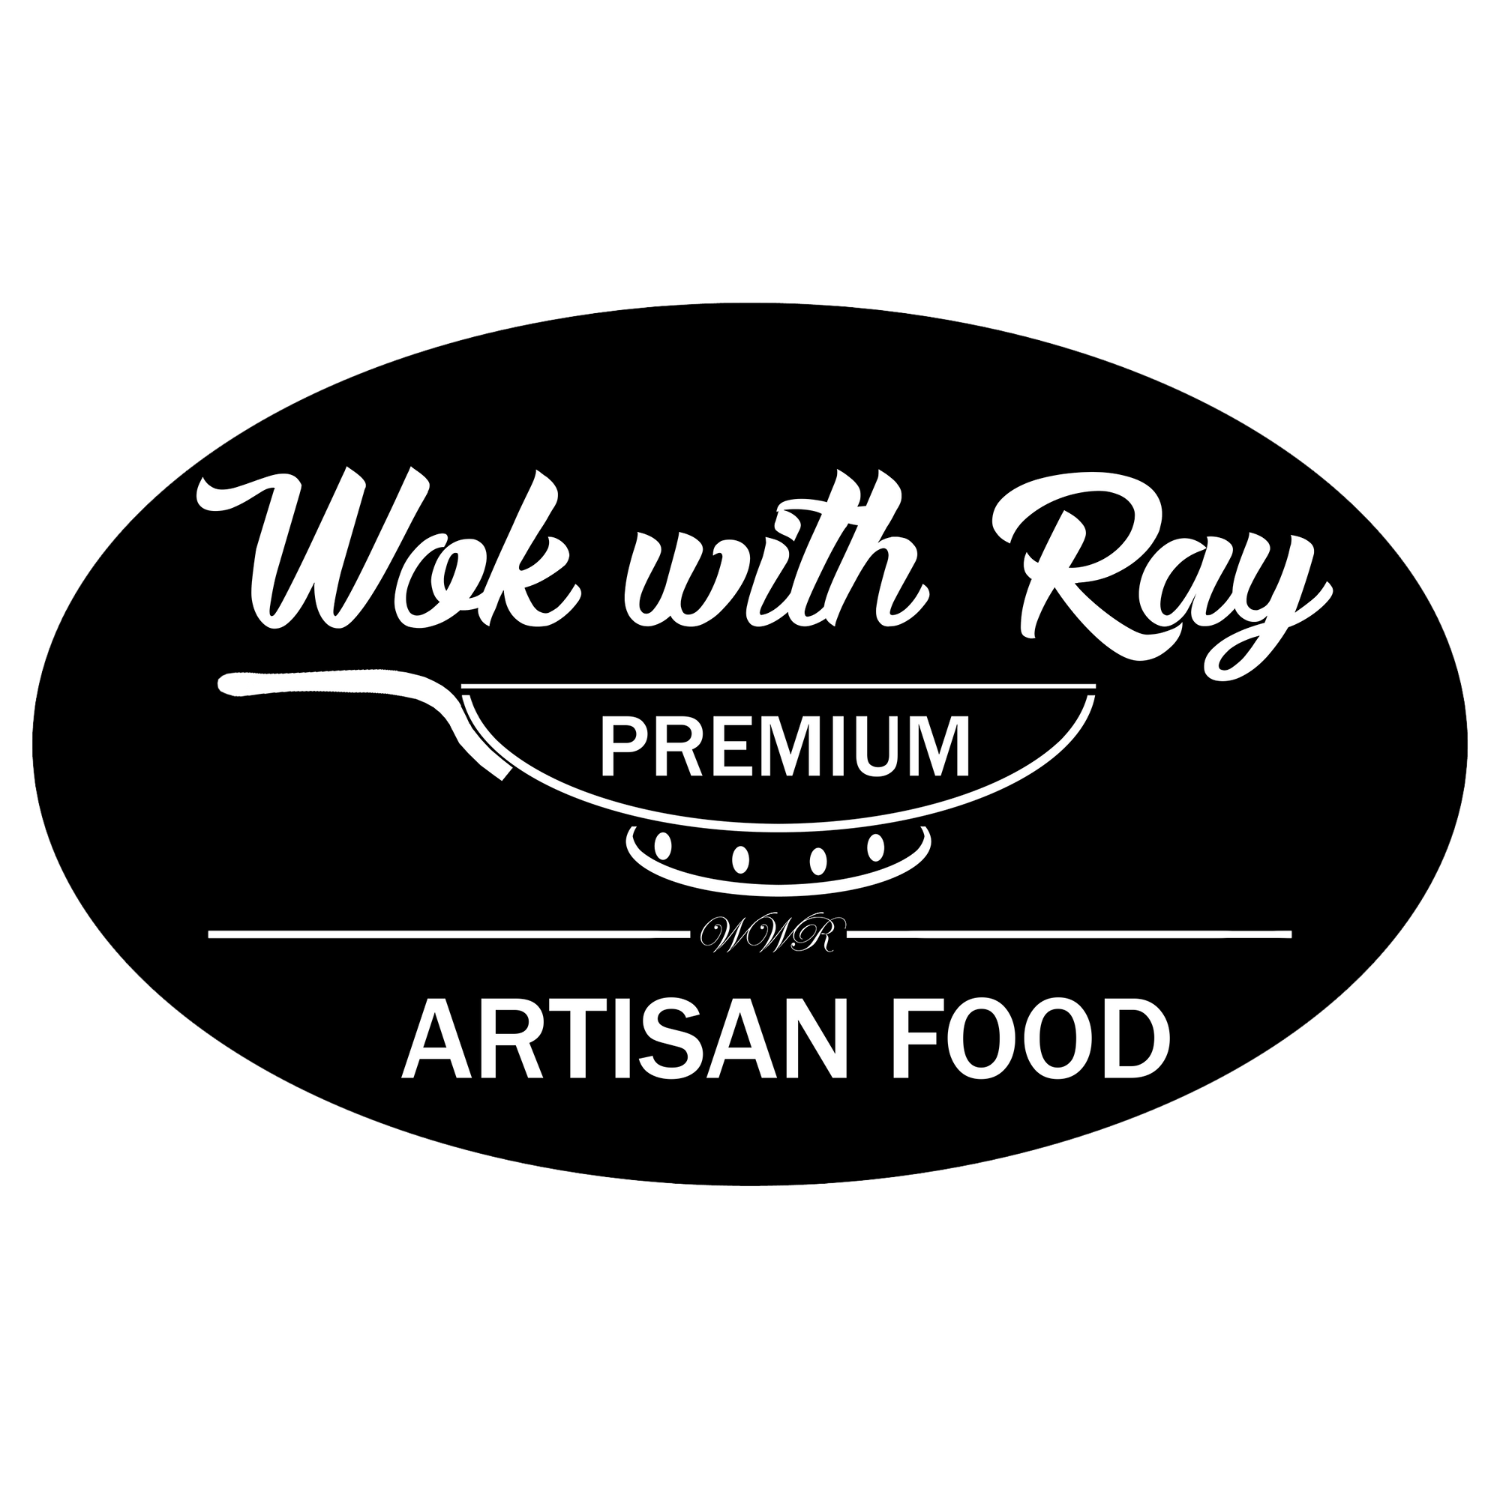 Wok with Ray - Premium Filipino artisan food.